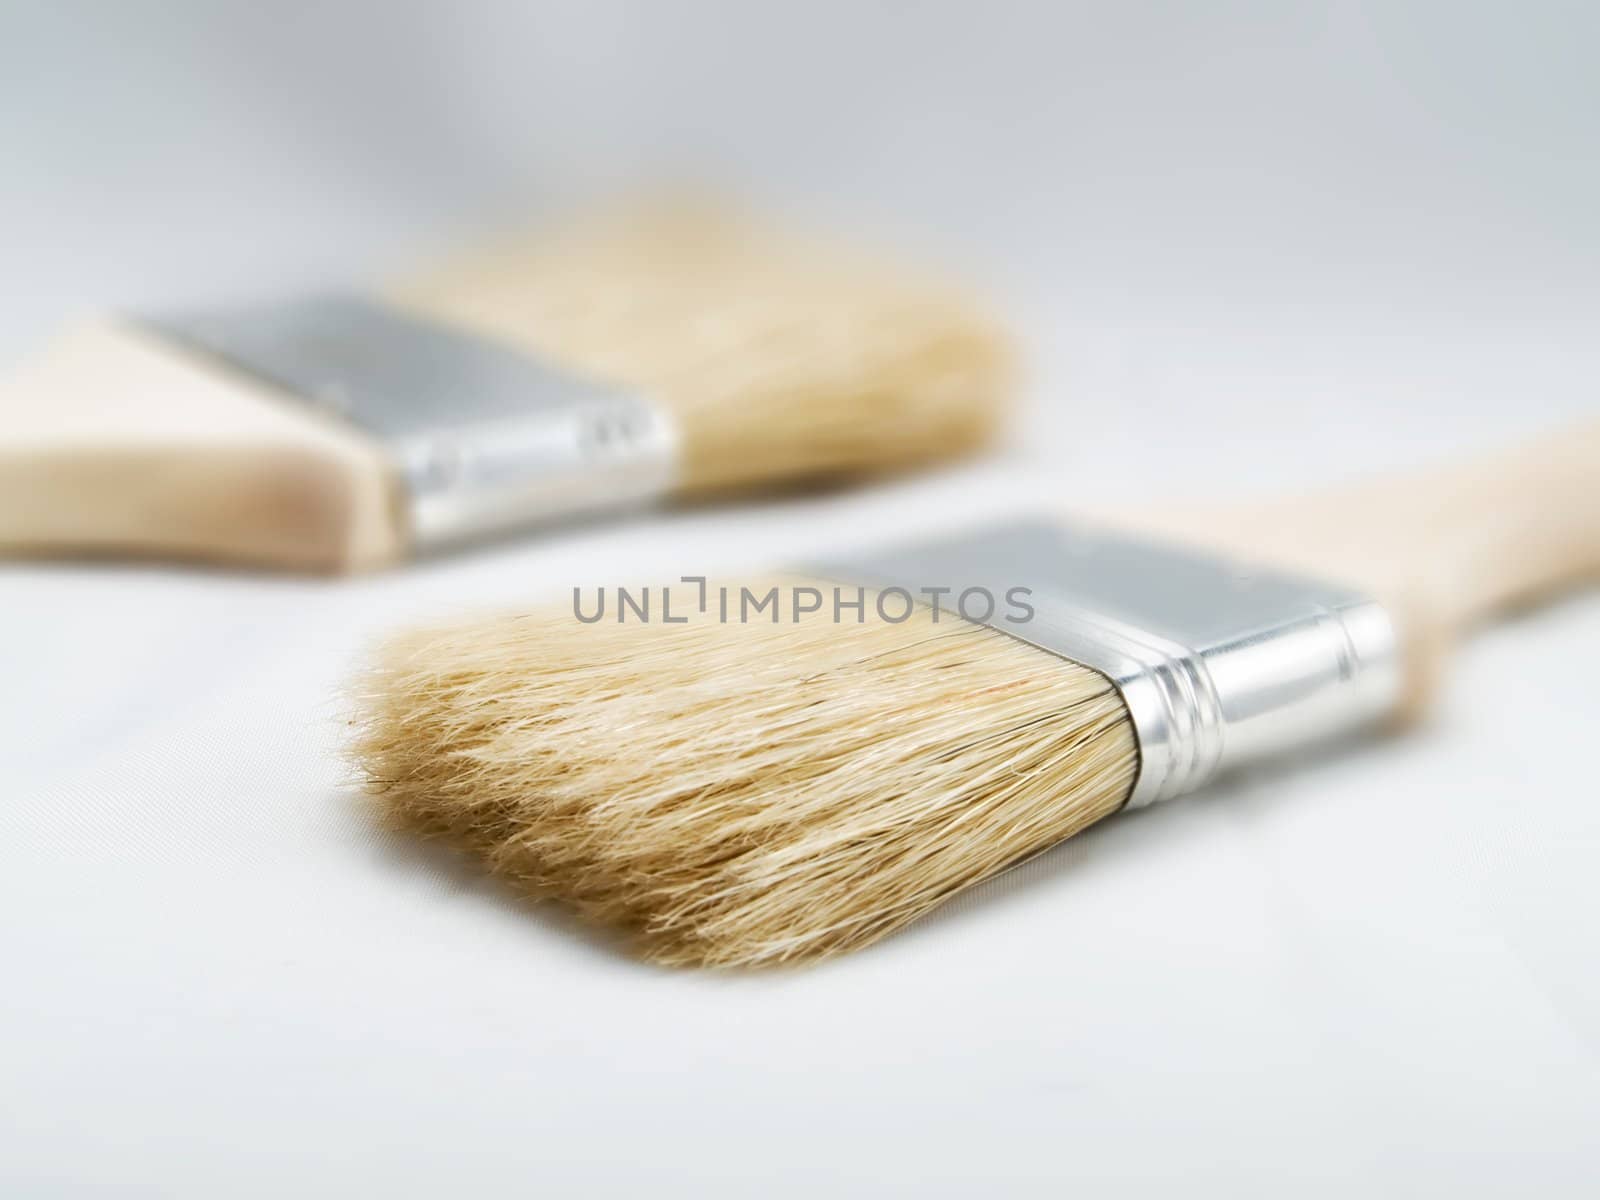 Paintbrushes by henrischmit